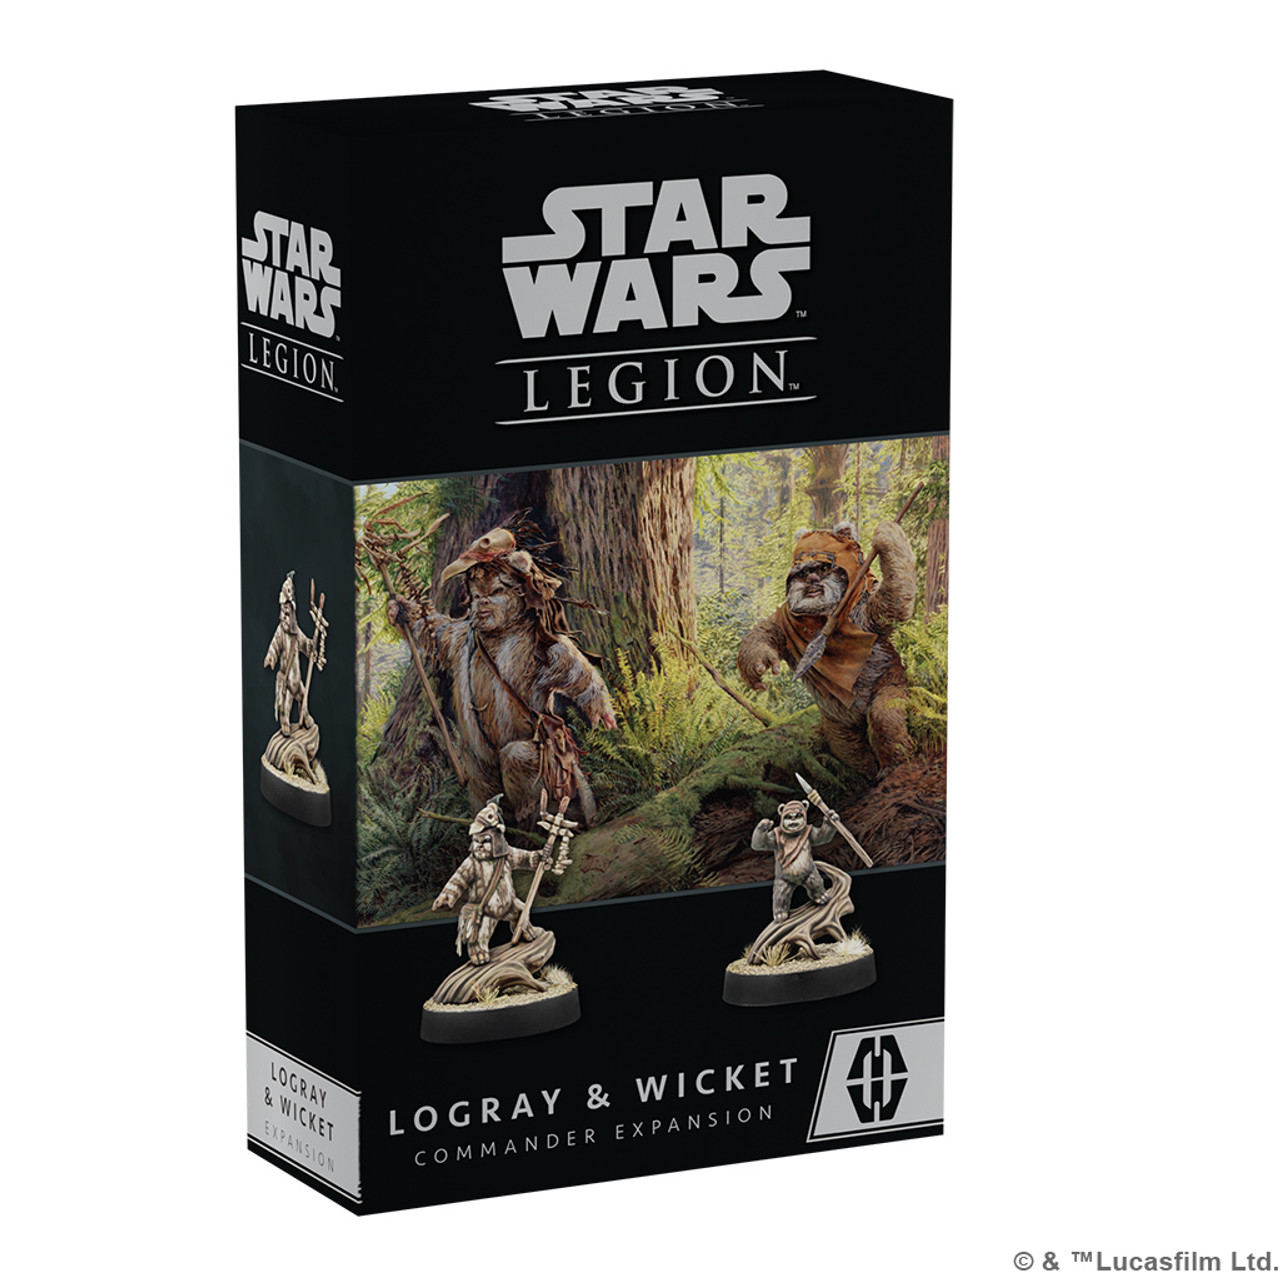 SWL110 - STAR WARS: LEGION- LOGRAY & WICKET COMMANDER EXPANSION